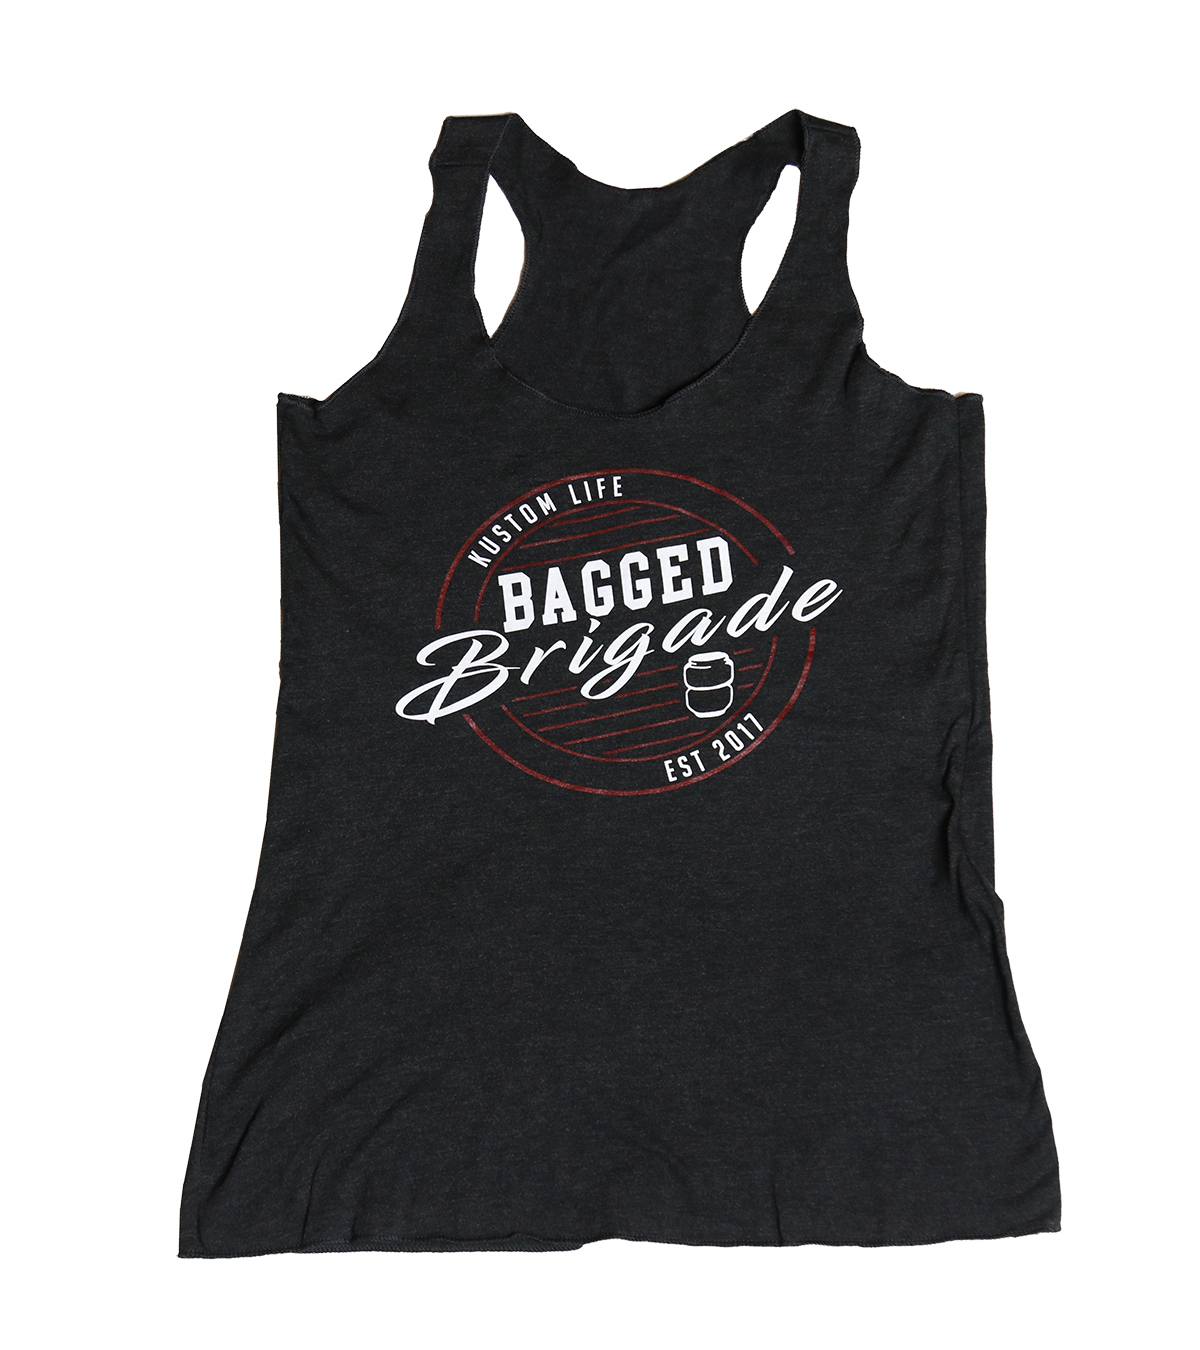 Bagged Brigade | Kustom Life